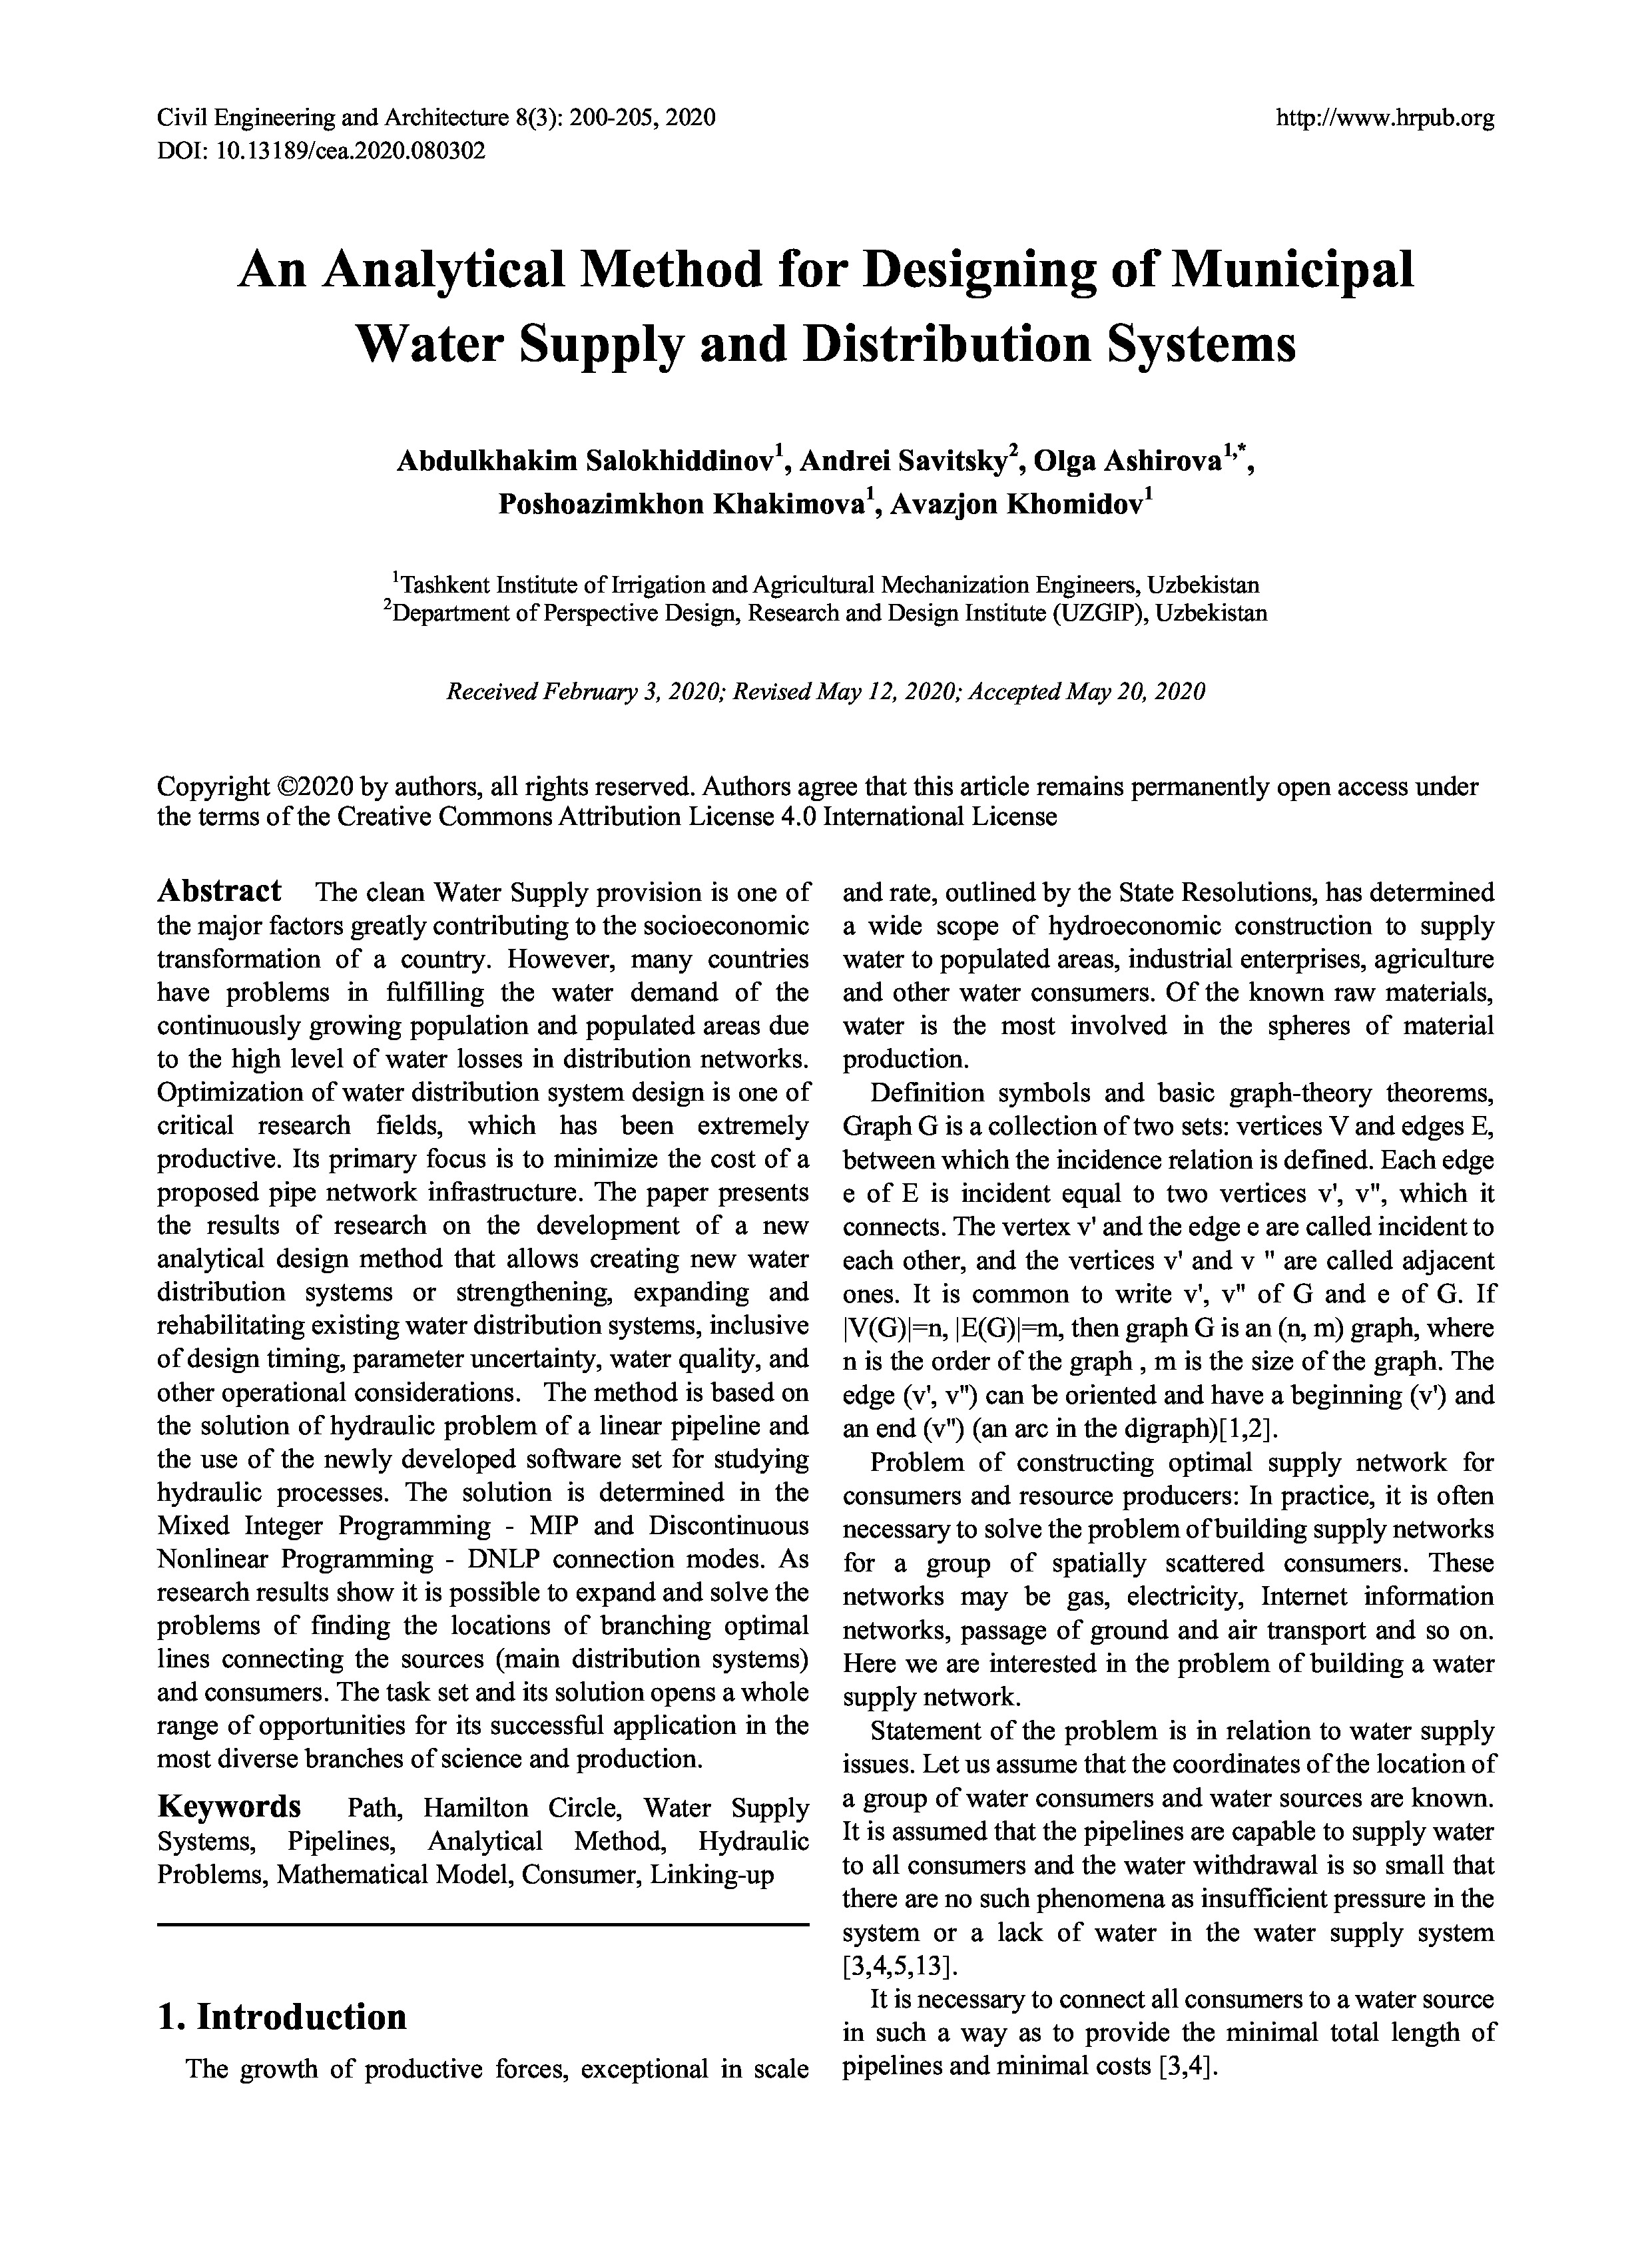 An Analytical Method for Designing of Municipal Water Supply and Distribution Systems | A.Salokhiddinov, A.Savitsky, O.Ashirova, P.Khakimova, A.Khomidov